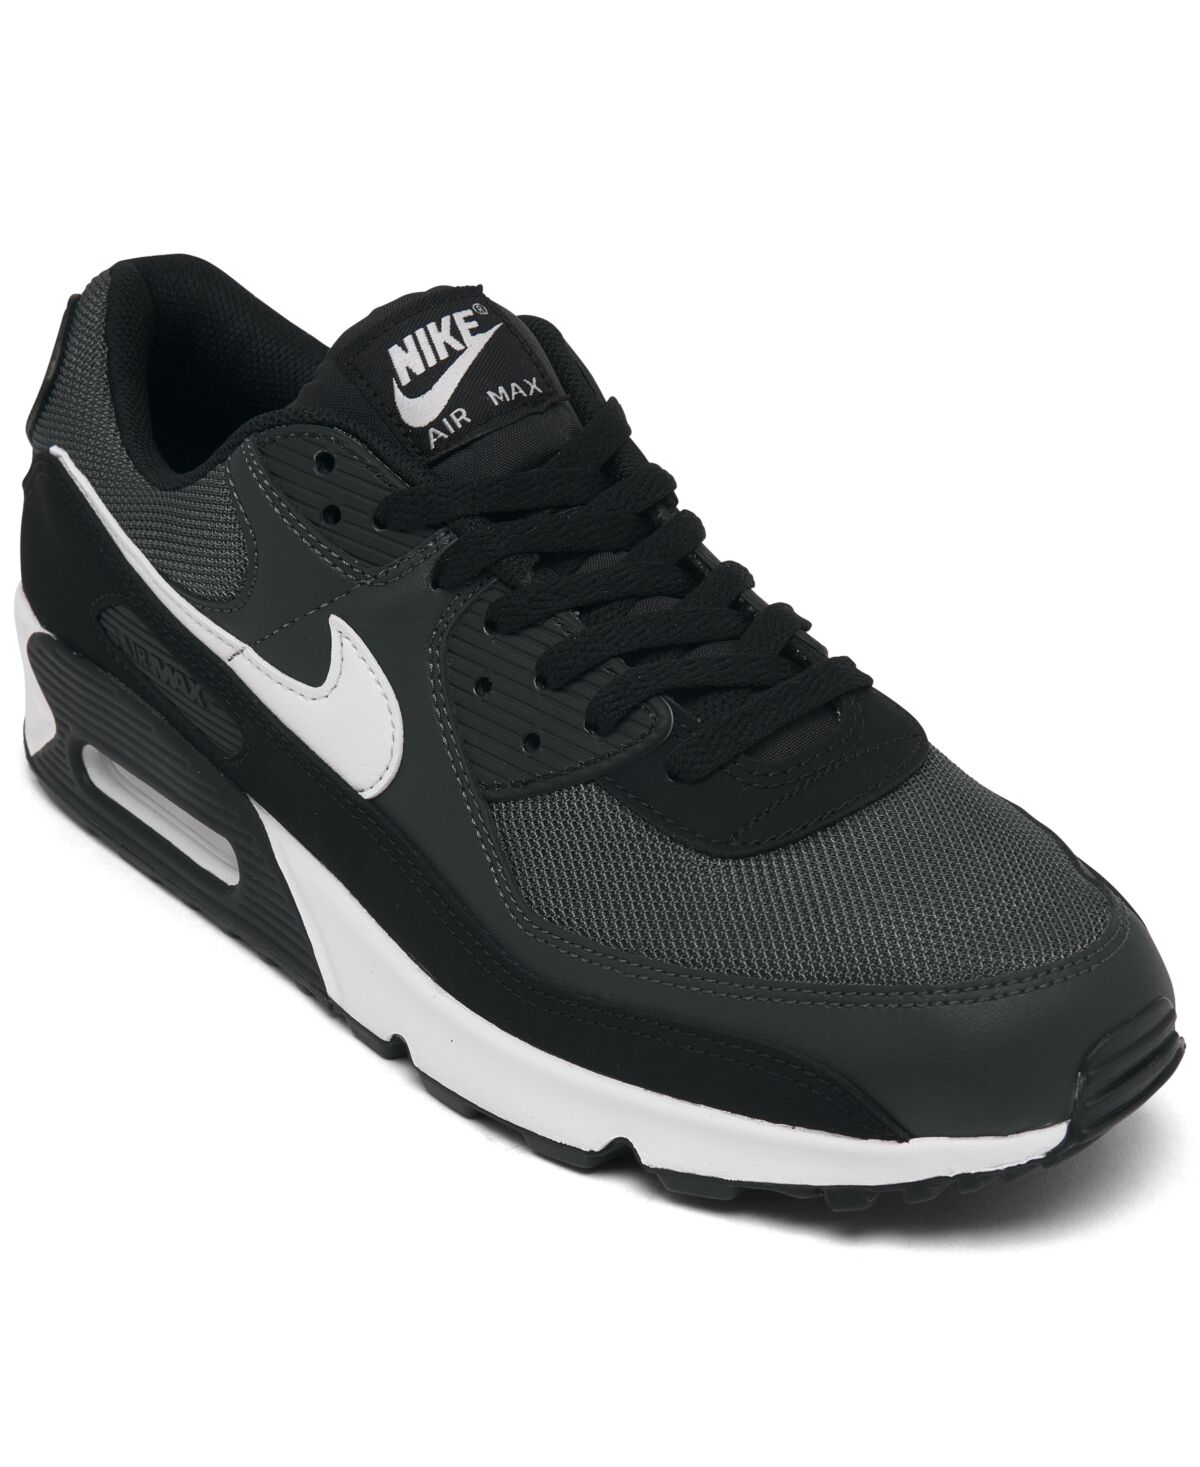 Nike Men's Air Max 90 Casual Sneakers from Finish Line - Iron Grey/Dark Smoke Grey/Black